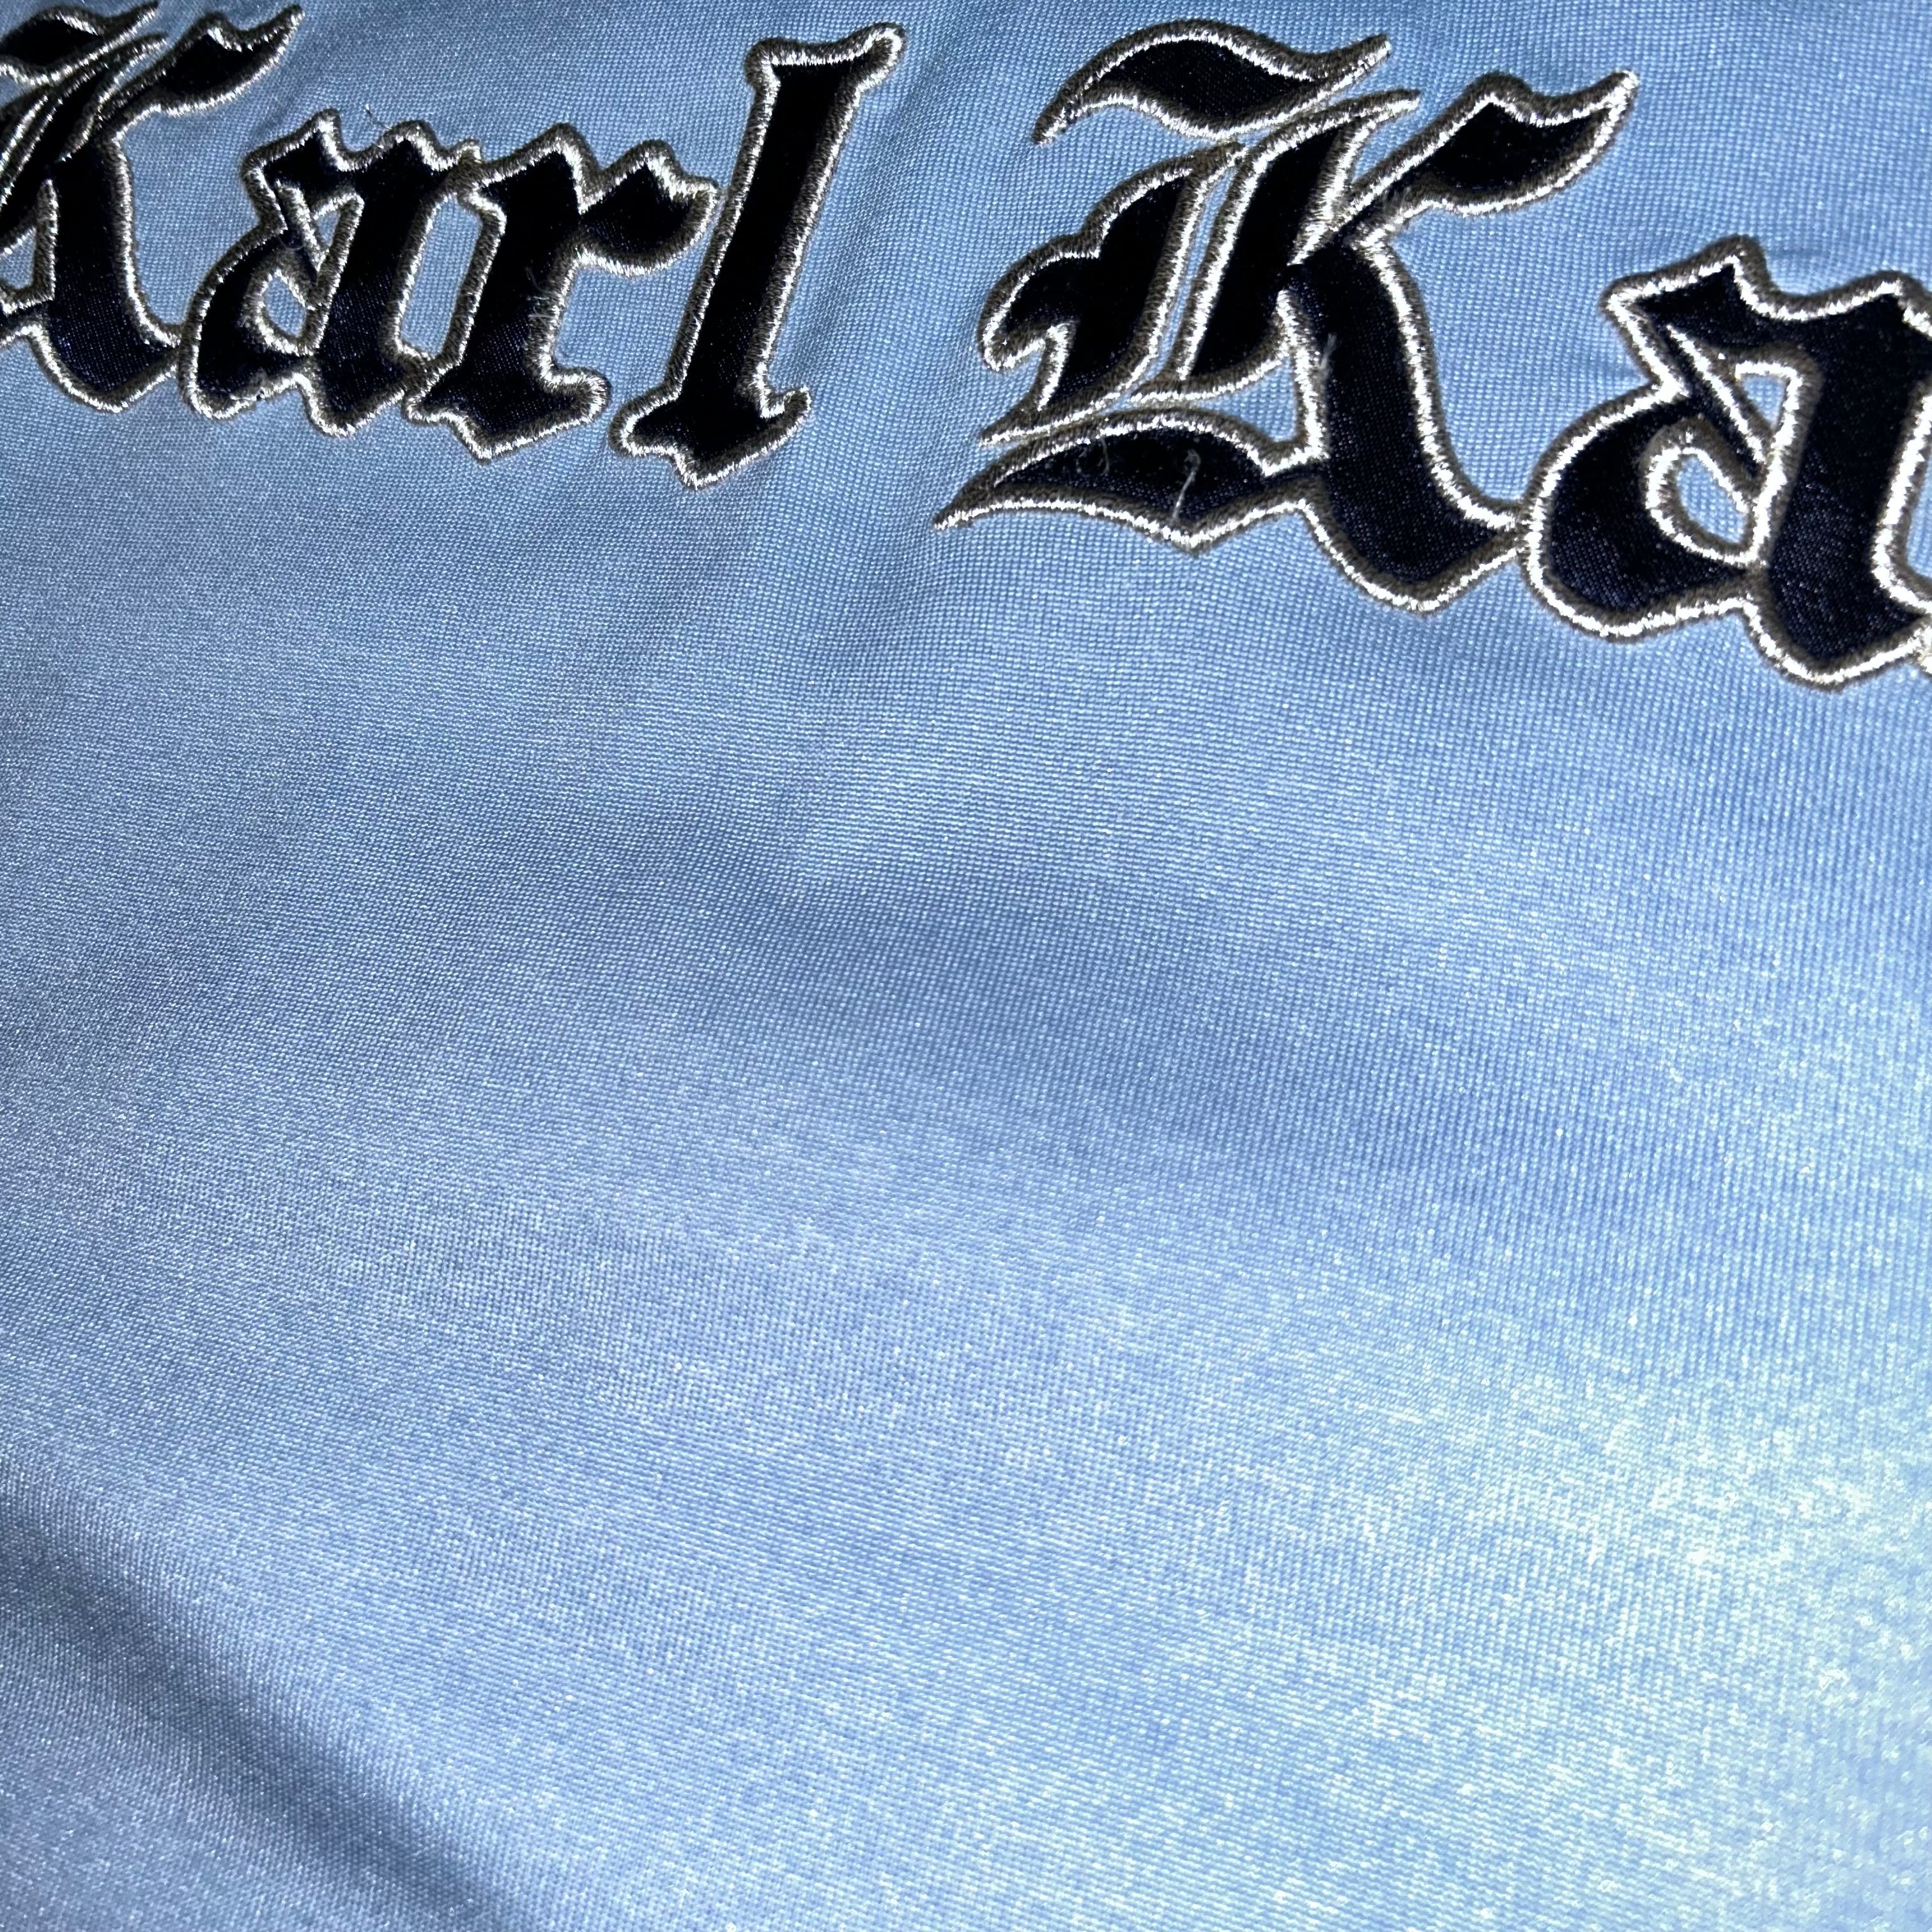 Jersey Karl Kani South Central Vintage  (XL)